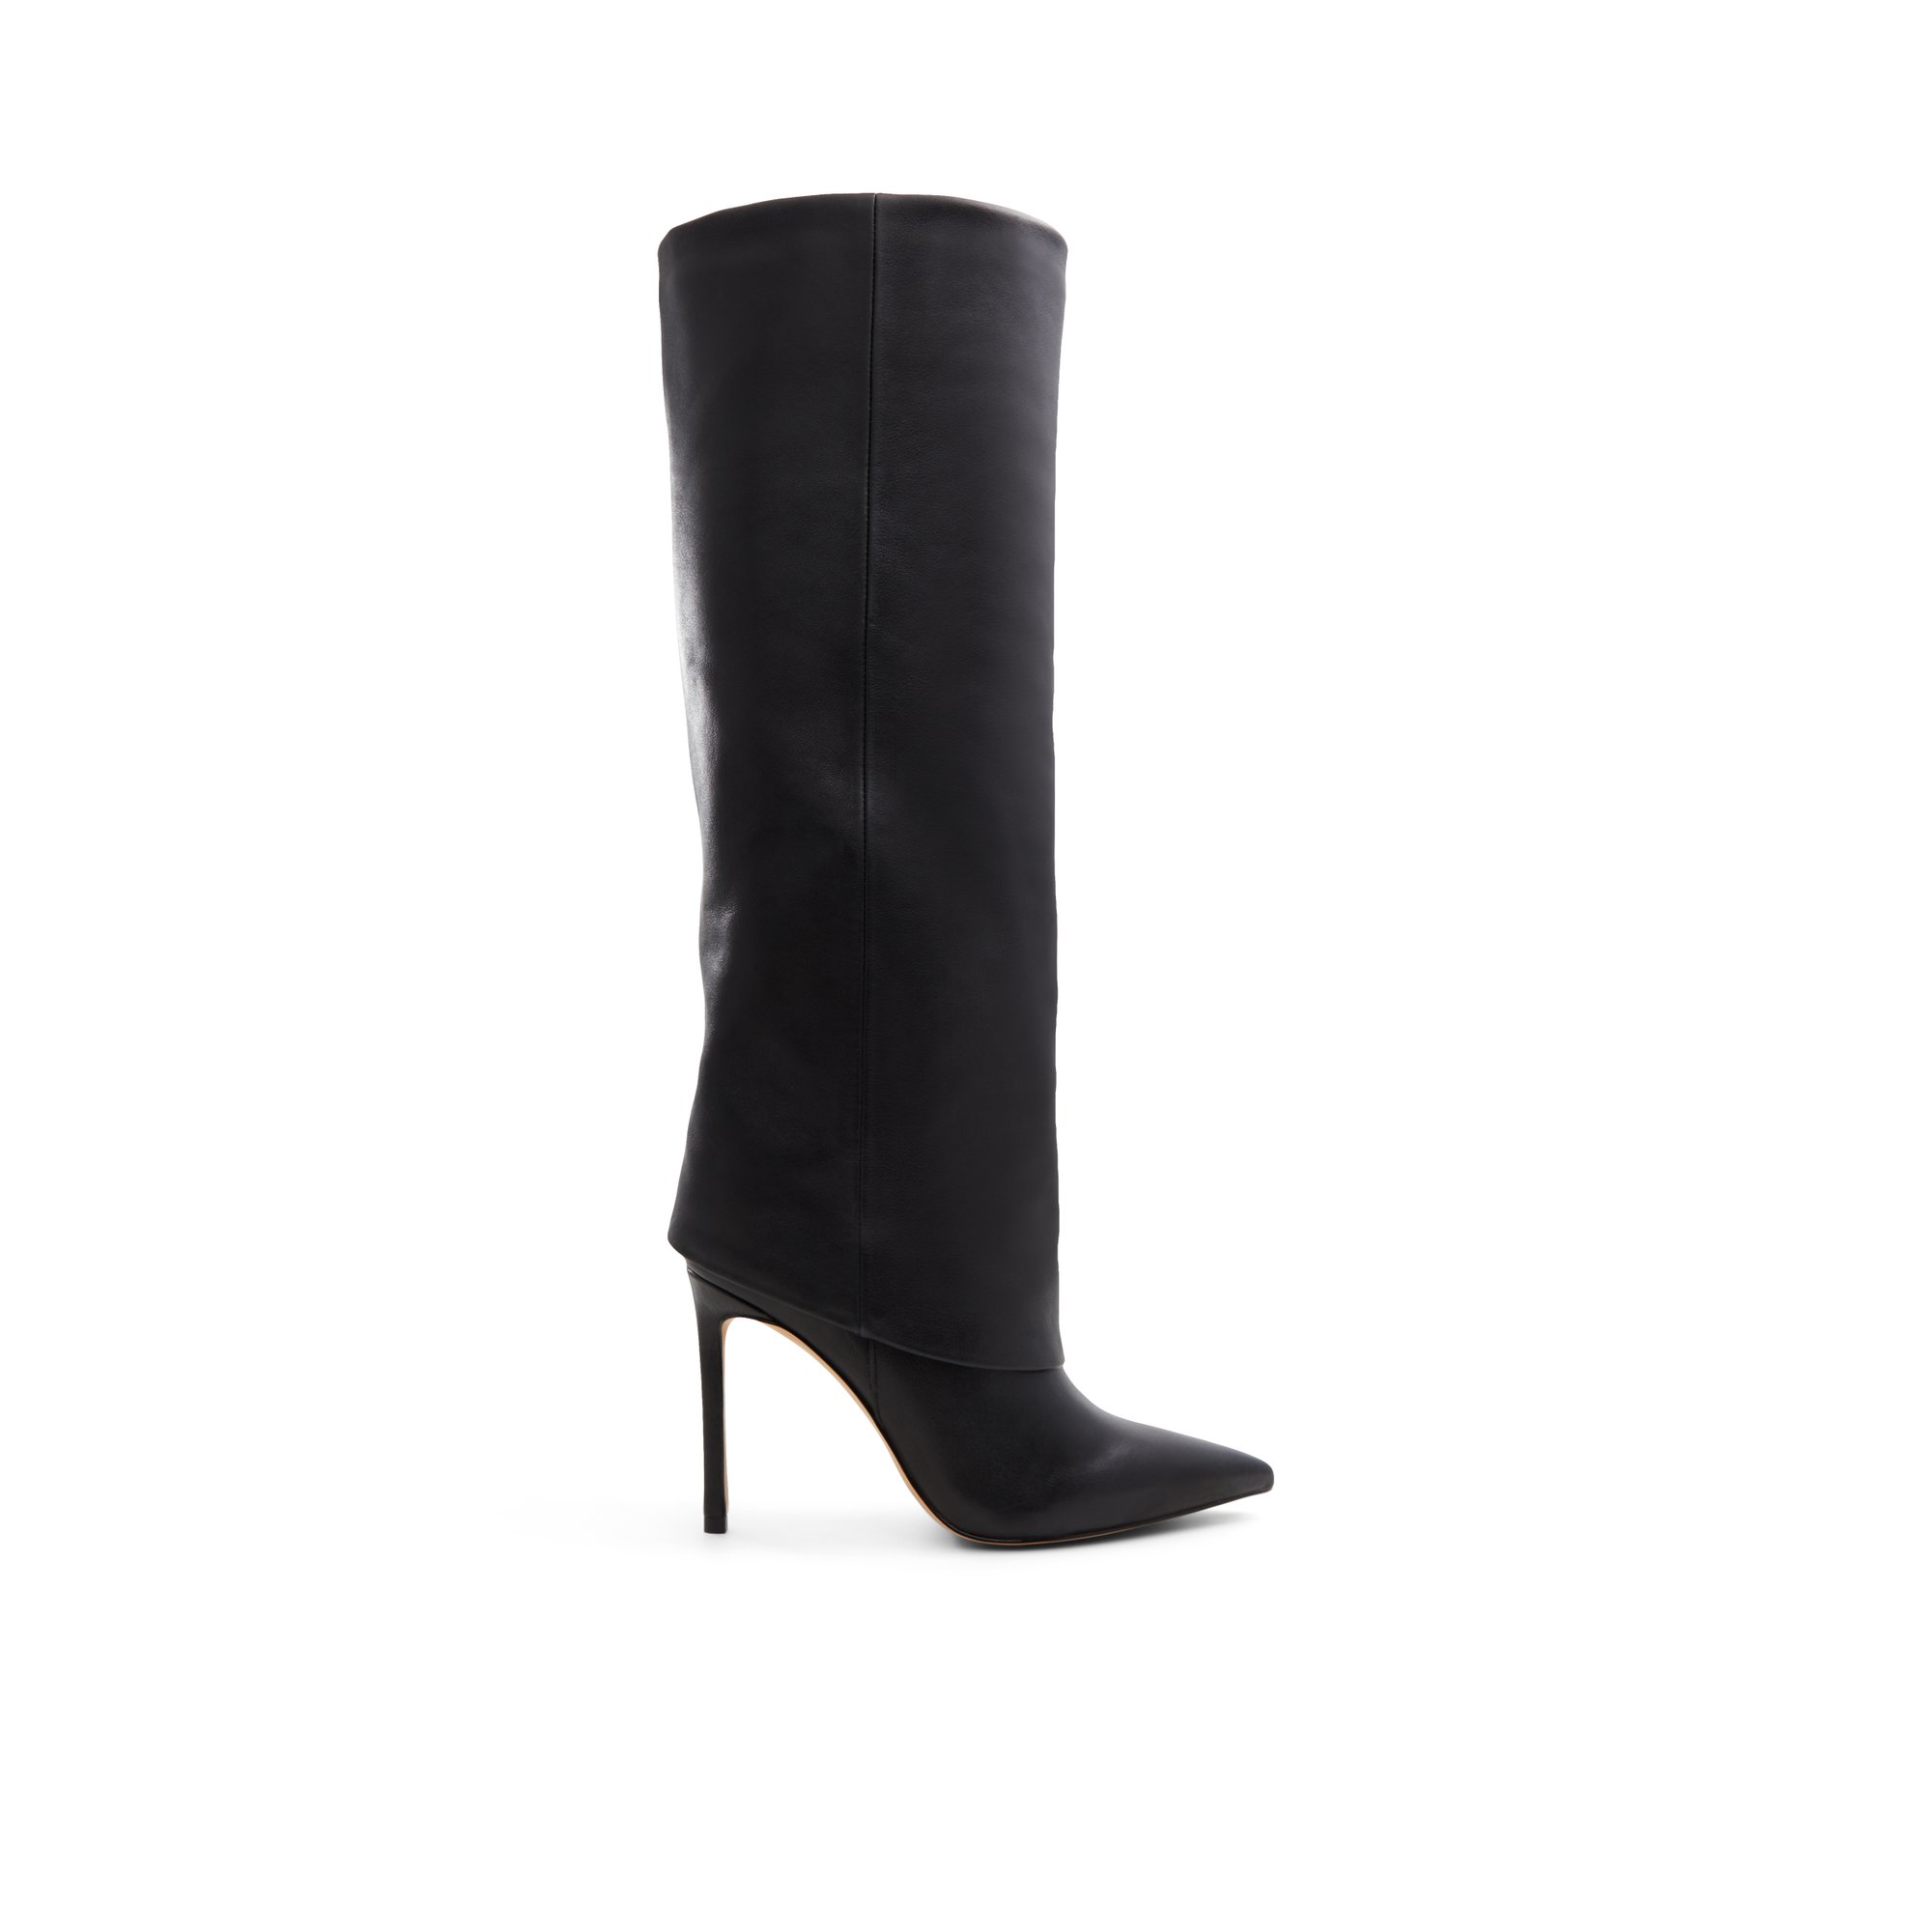 ALDO Livy - Women's Boots Tall - Black